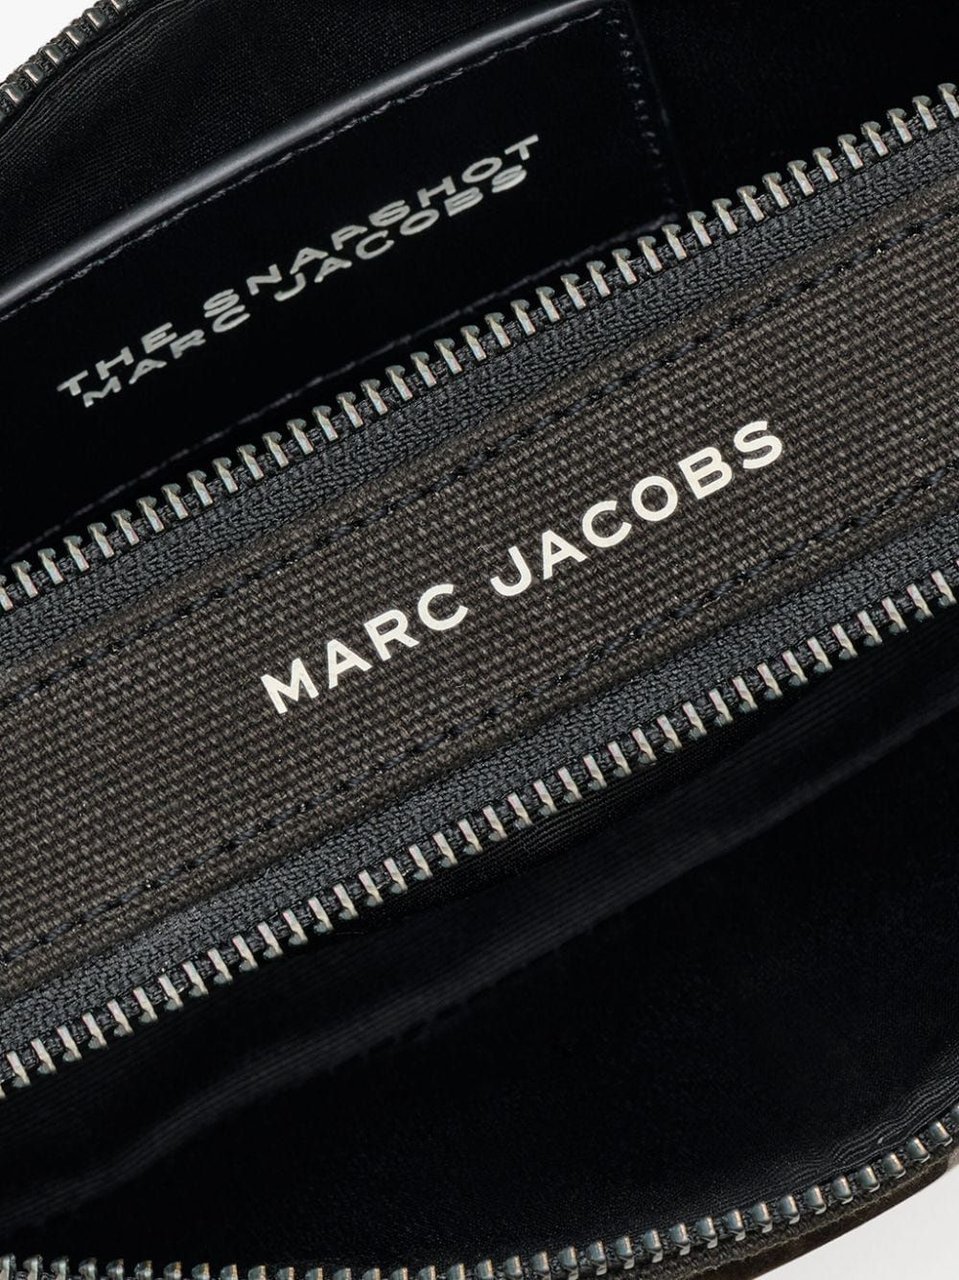 Marc Jacobs Bags Black Zwart